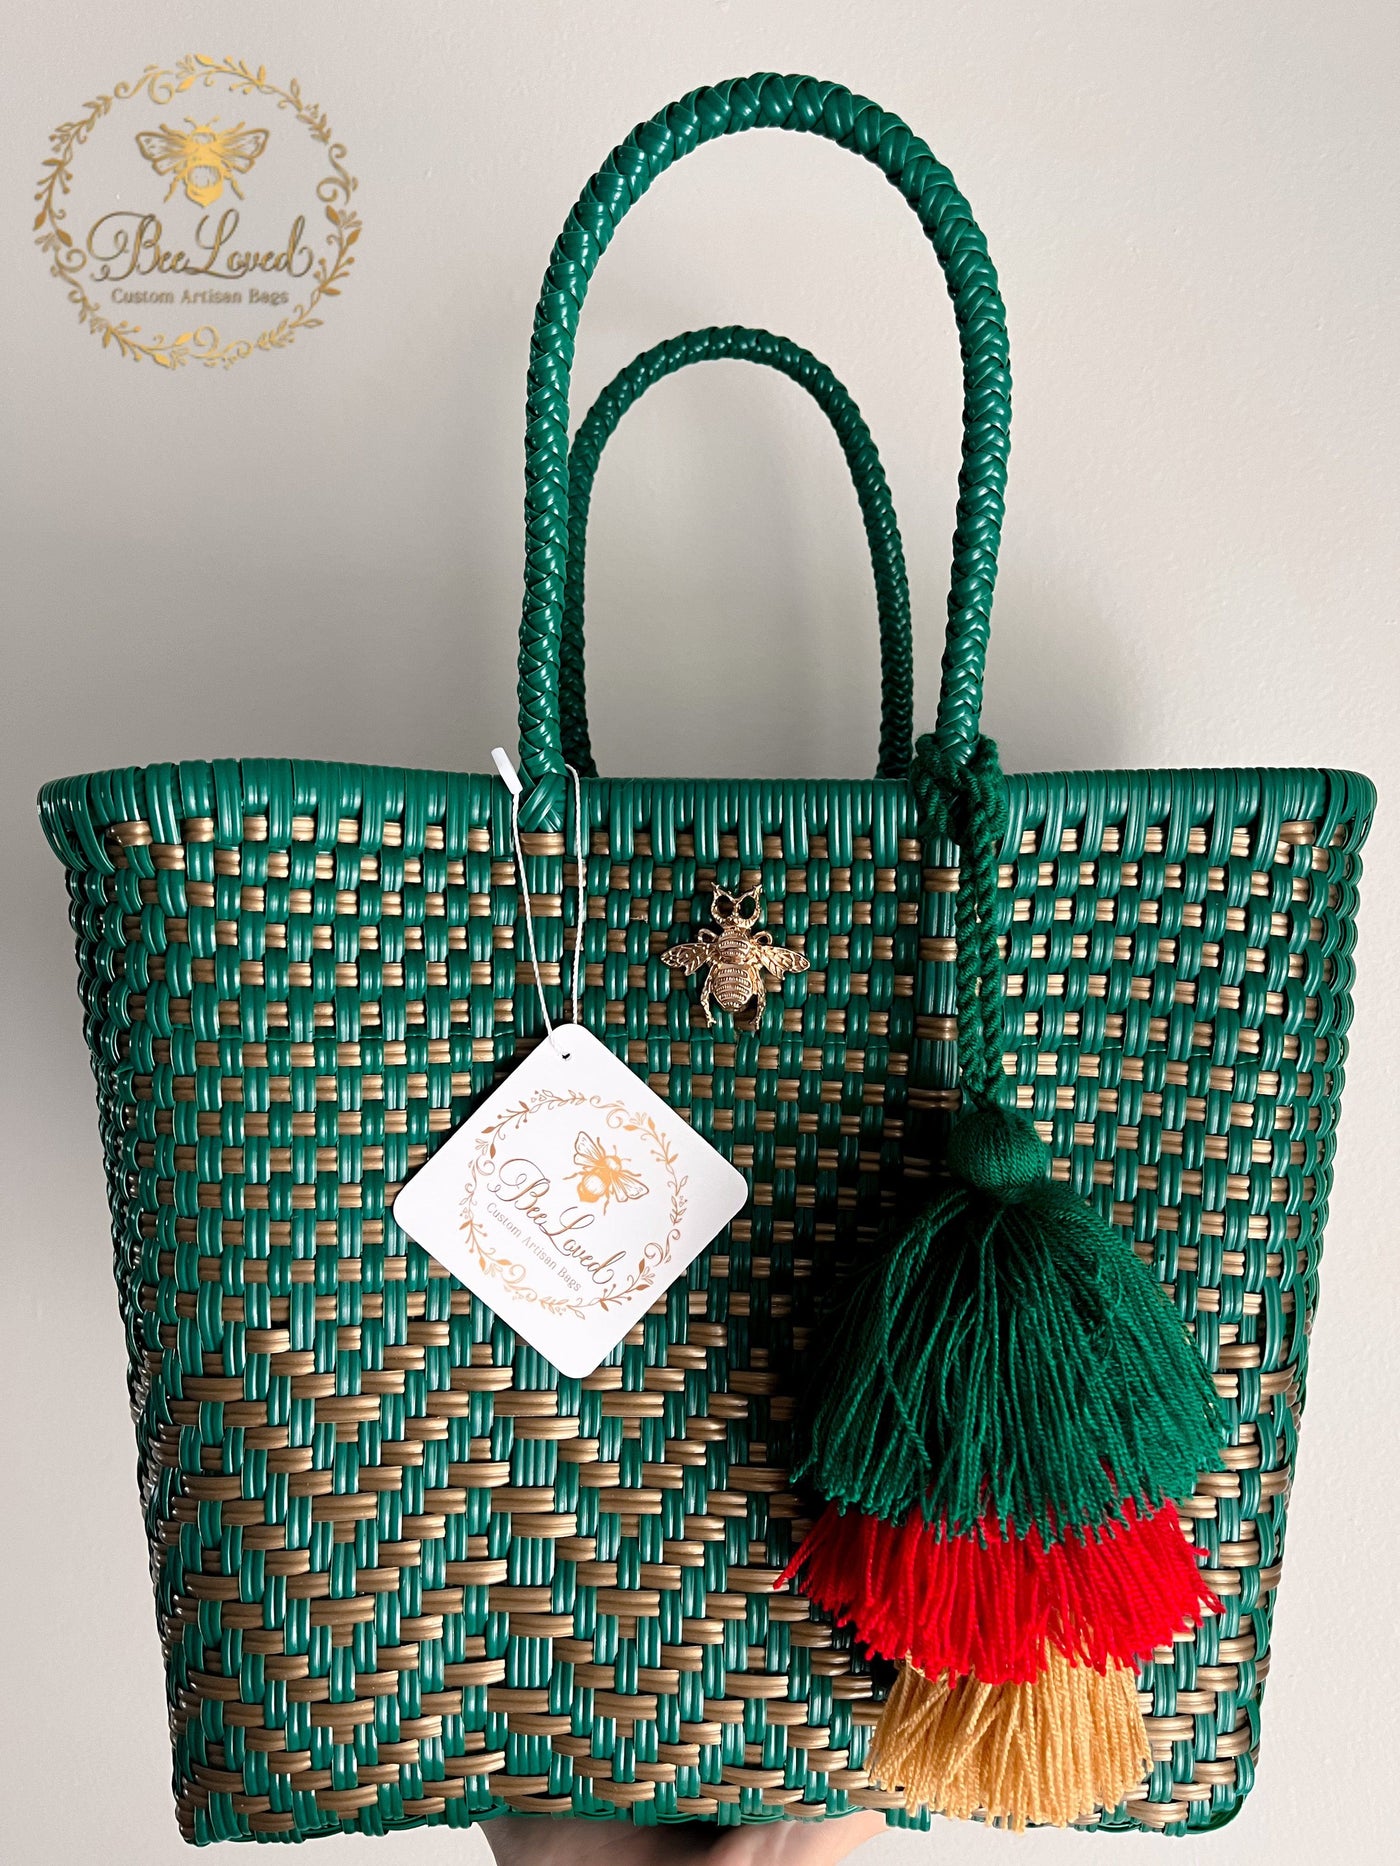 BeeLoved Custom Artisan Bags and Gifts Handbags Small Green and Gold Chevron Small Beech Bag